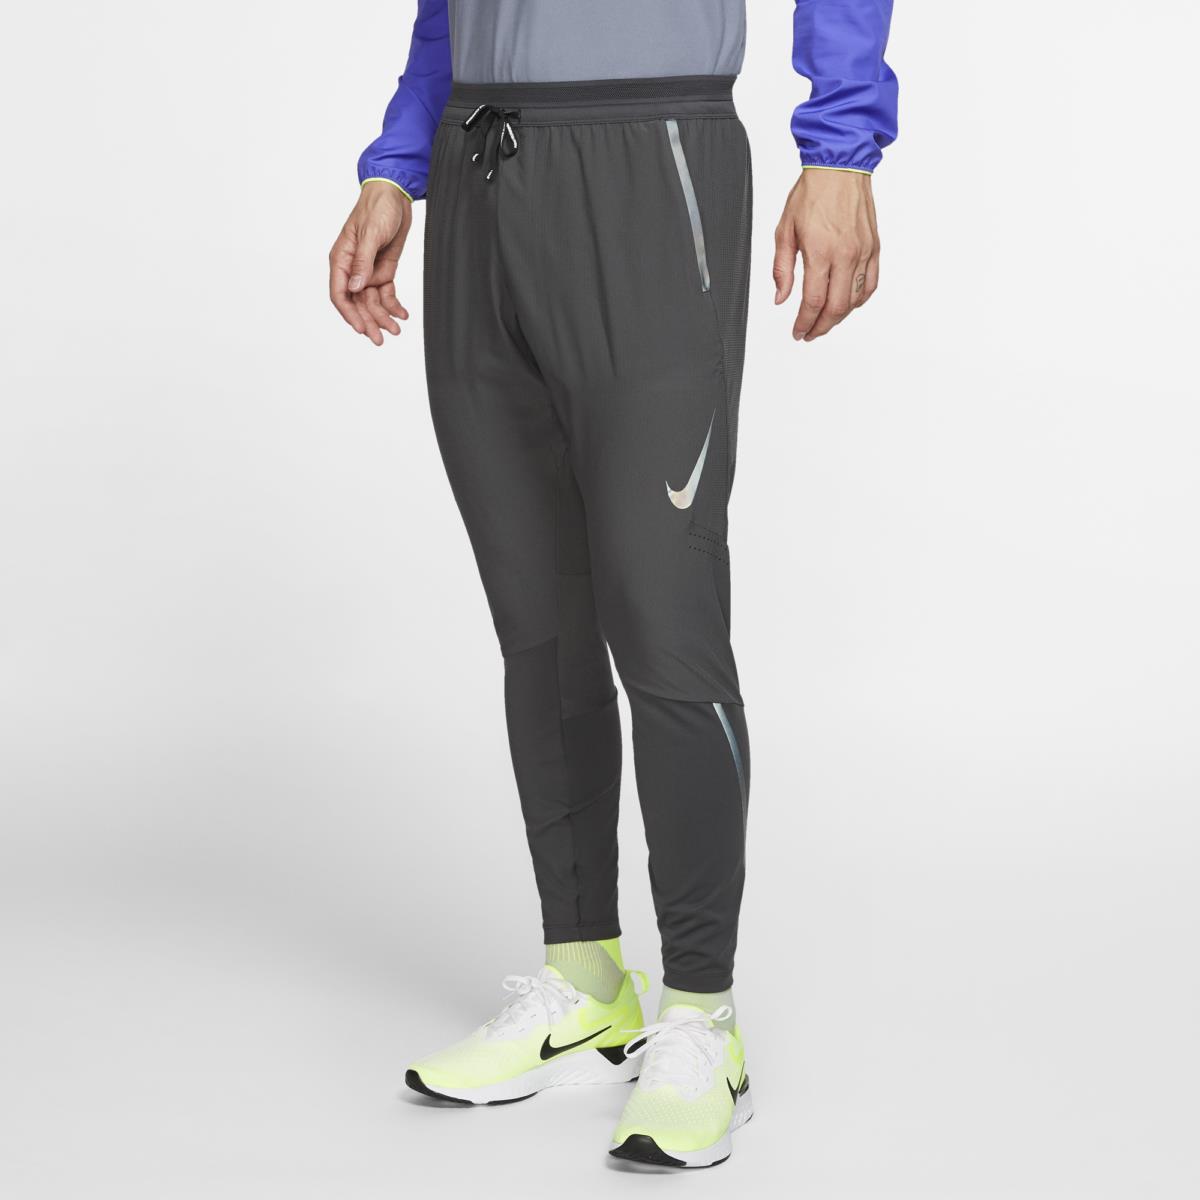 Nike Flex Swift Running Pants Joggers Dark Smoke Grey Reflective Slim Fit XL